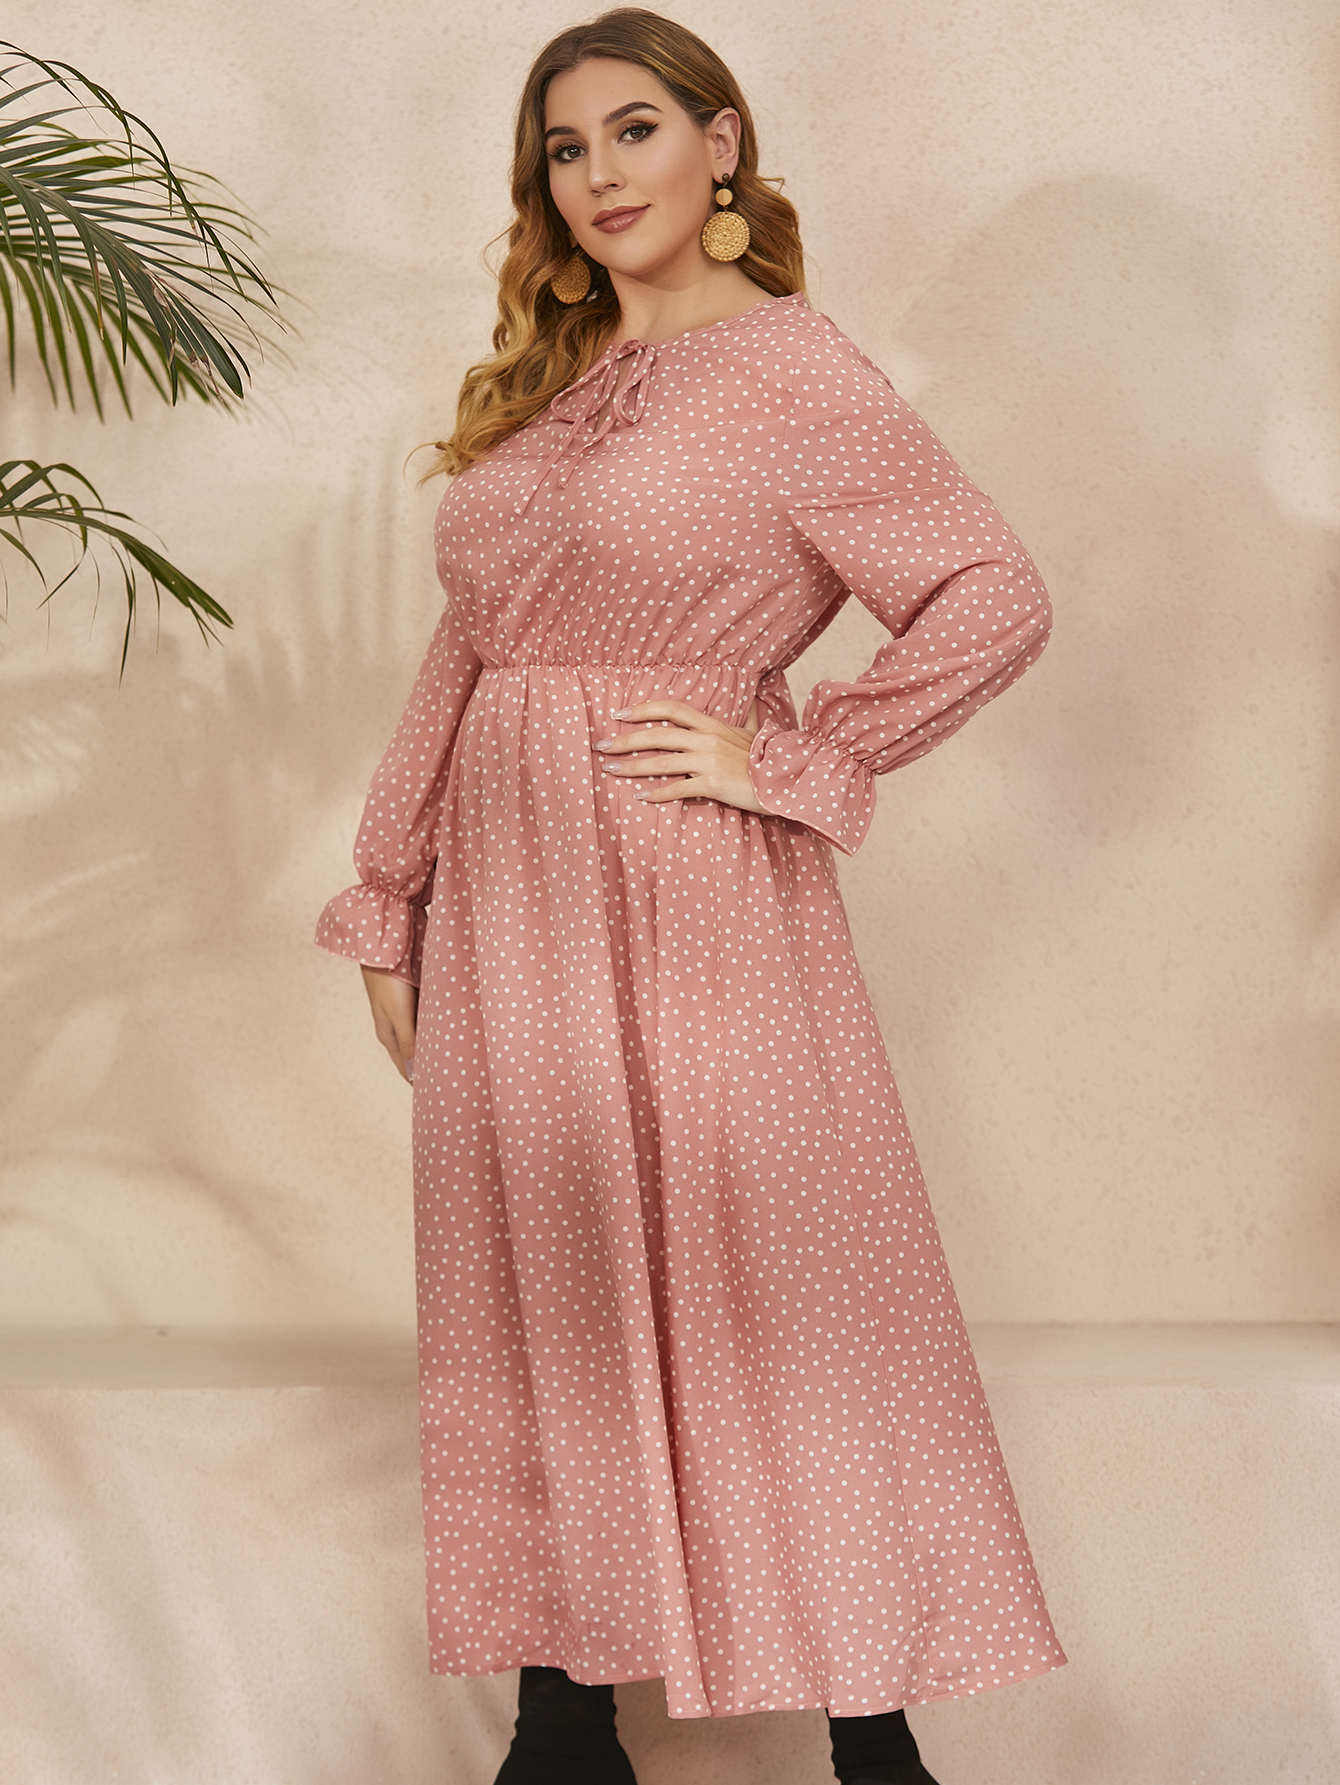 Plus Size Polka-Dot Loose-Fitting Long Sleeve Dress for Women - Ootddress